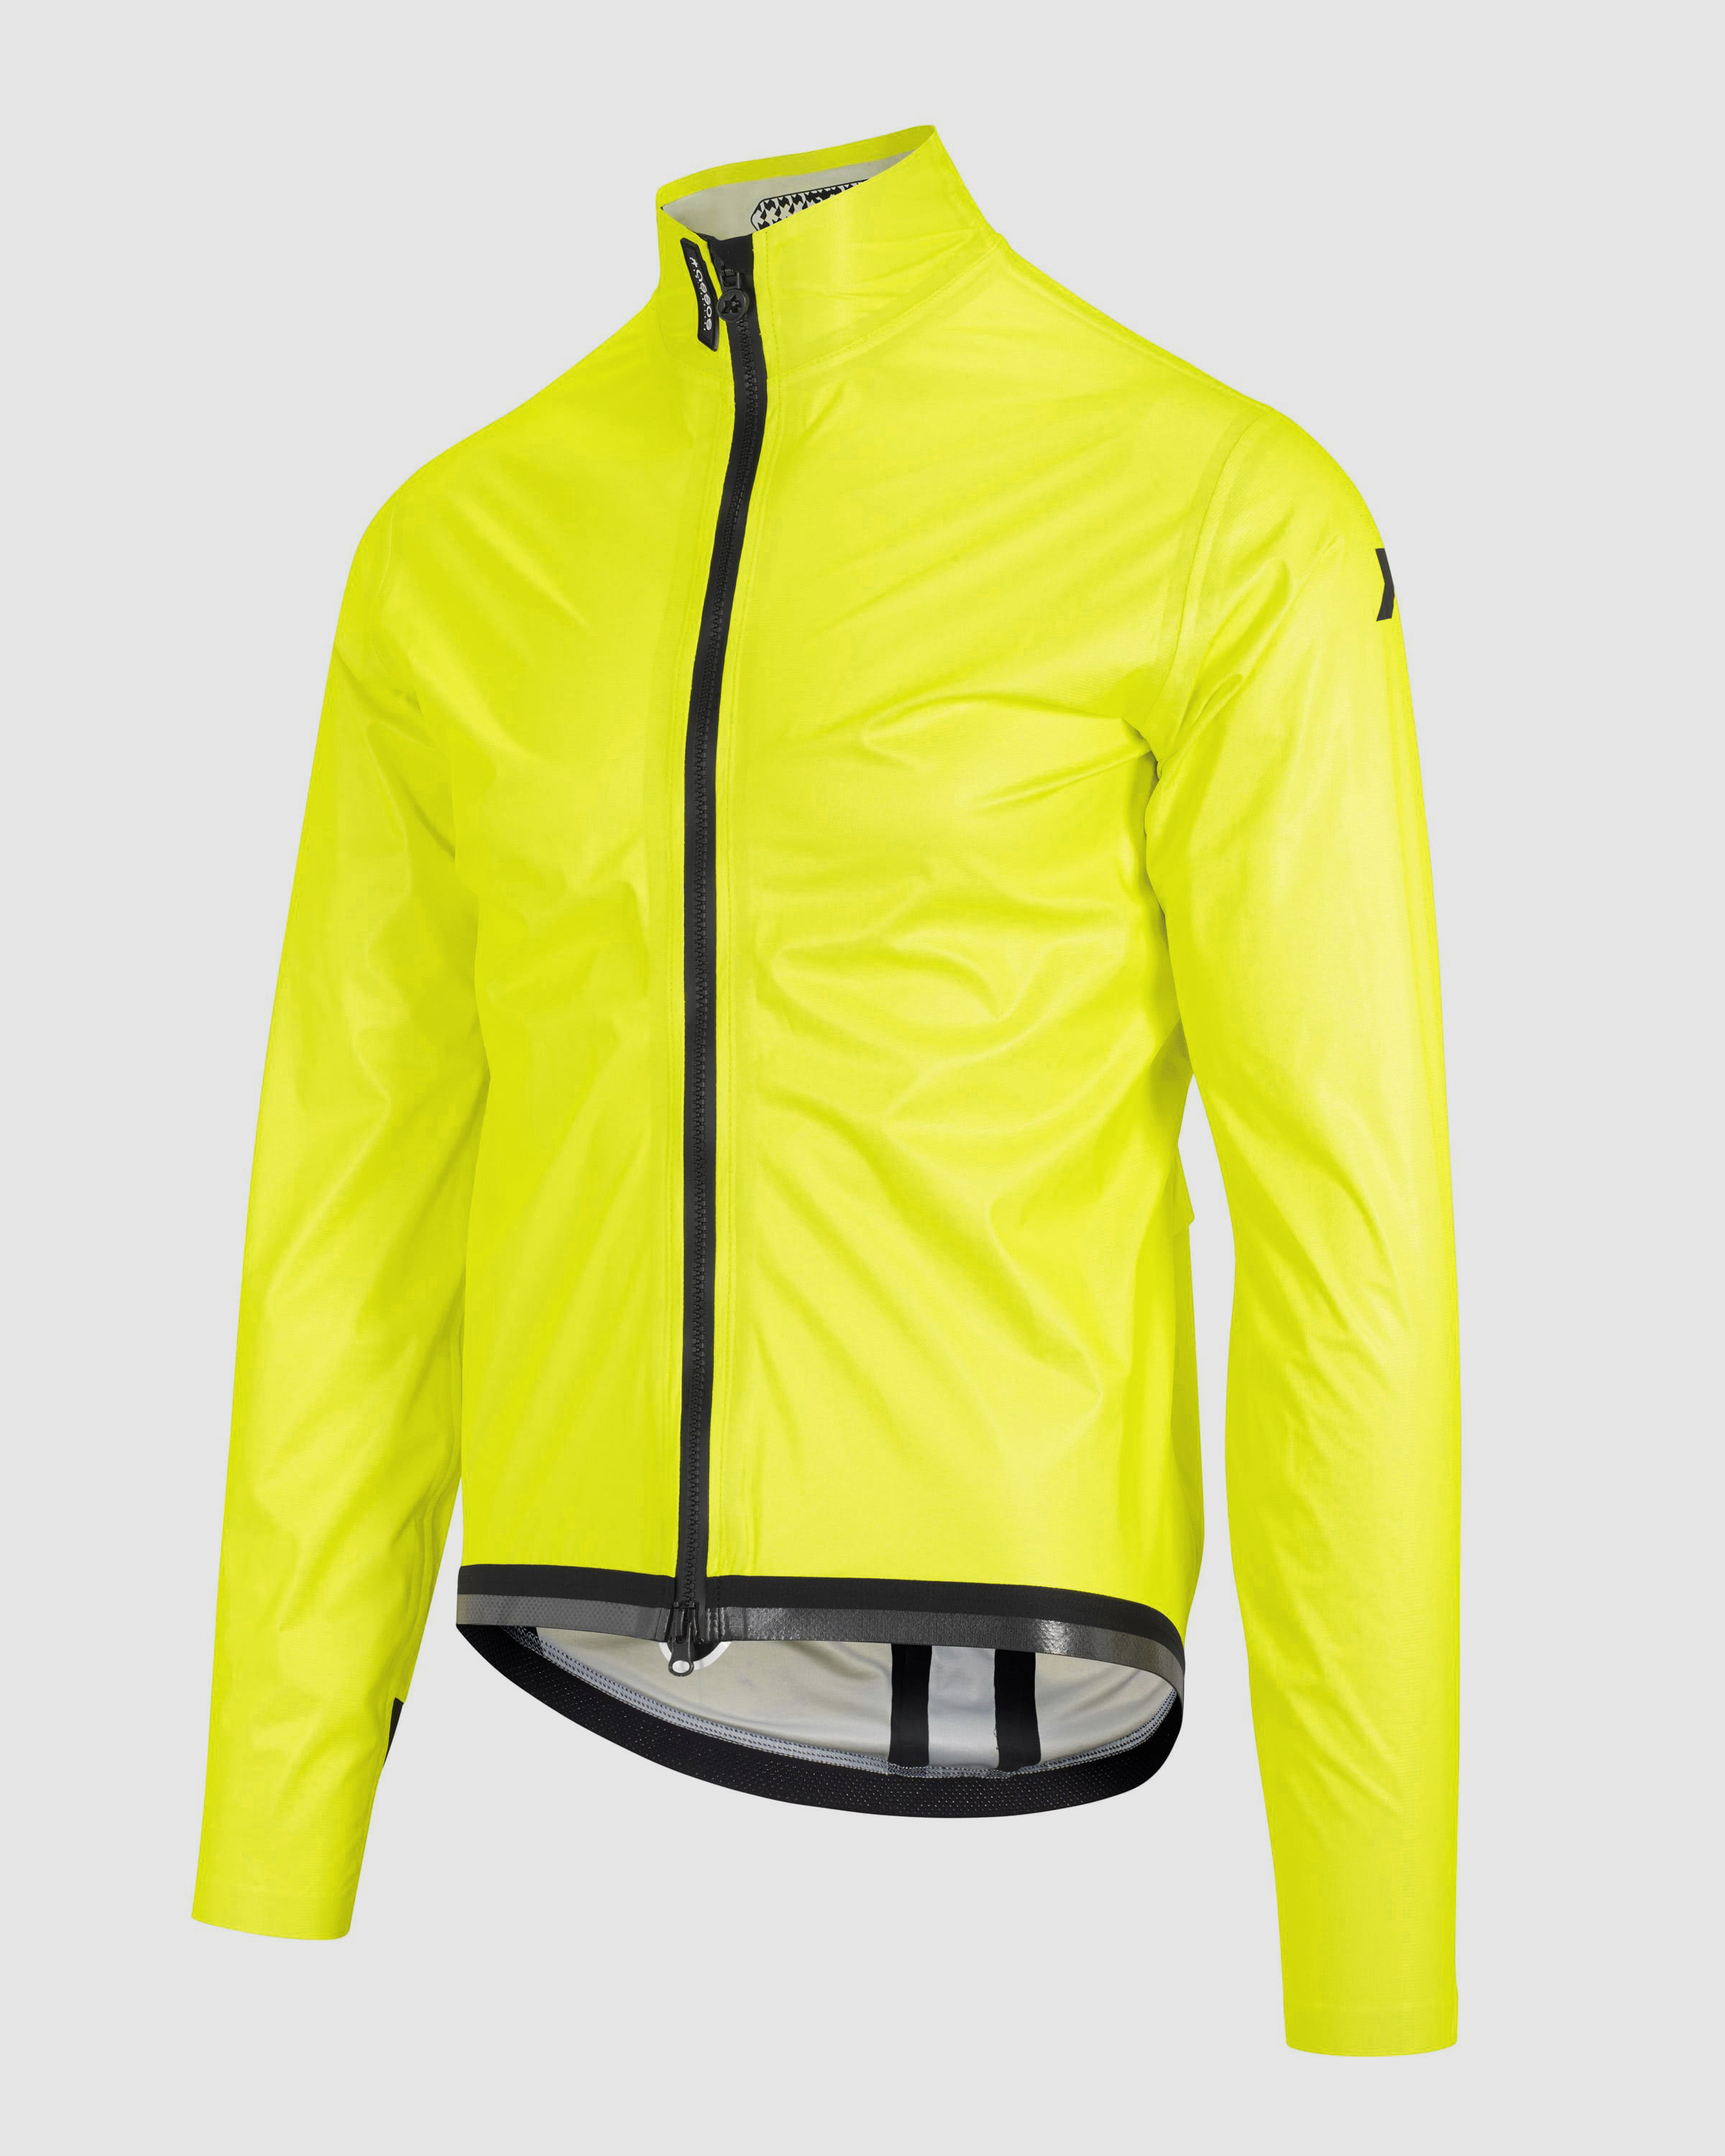 EQUIPE RS Schlosshund Rain Jacket EVO - ASSOS Of Switzerland - Official Outlet